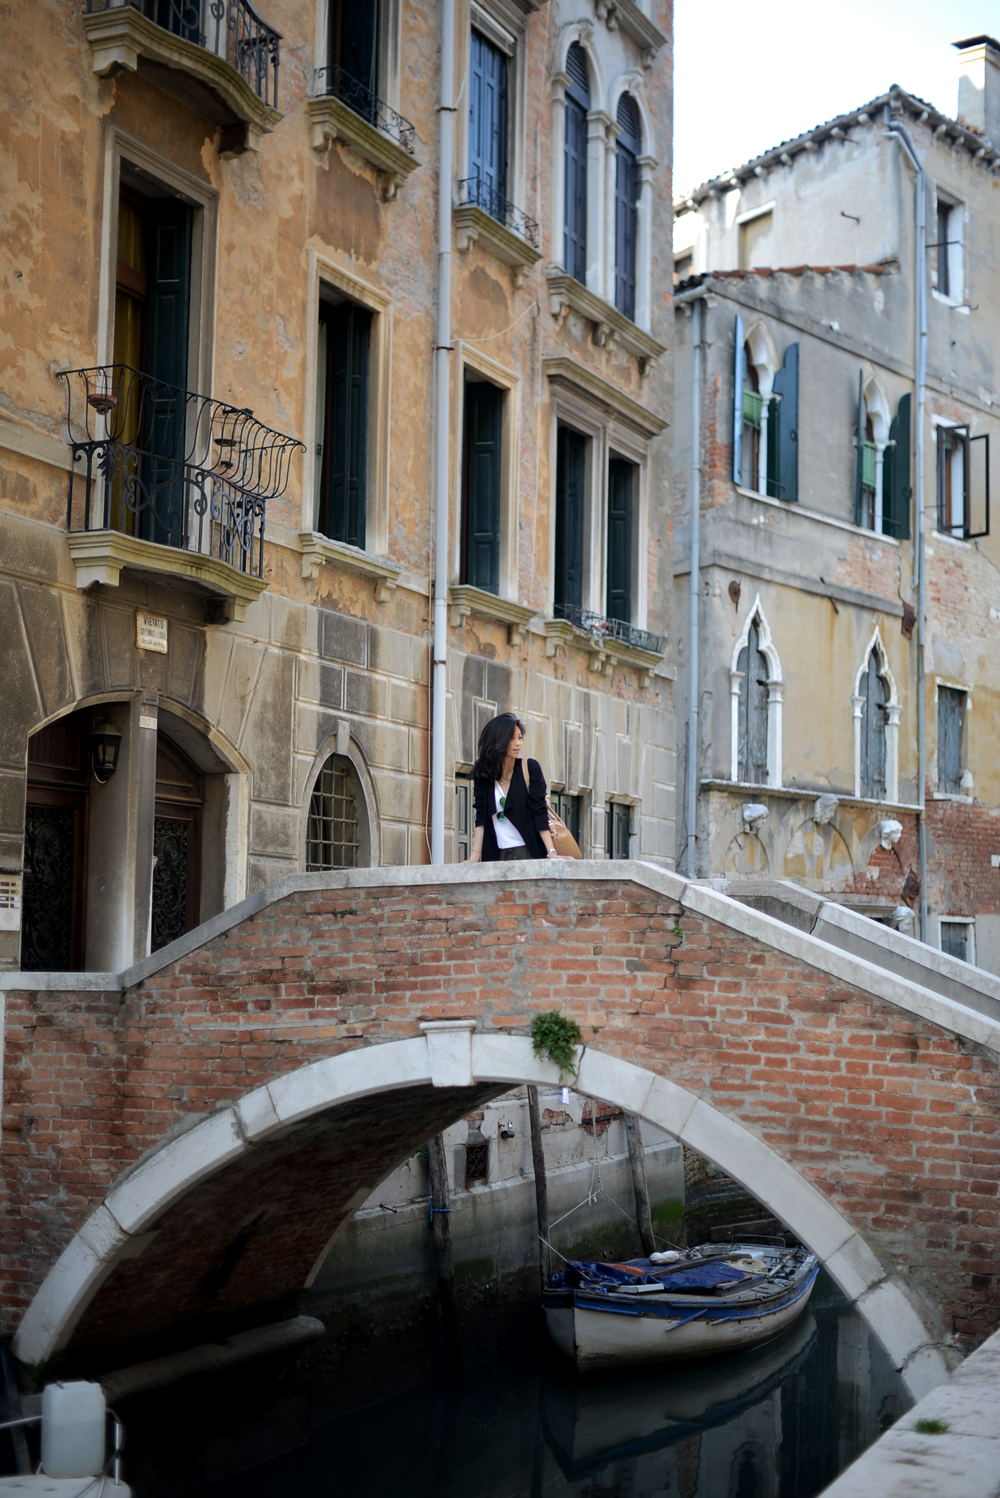 Venezia, Italy / FOREVERVANNY.com